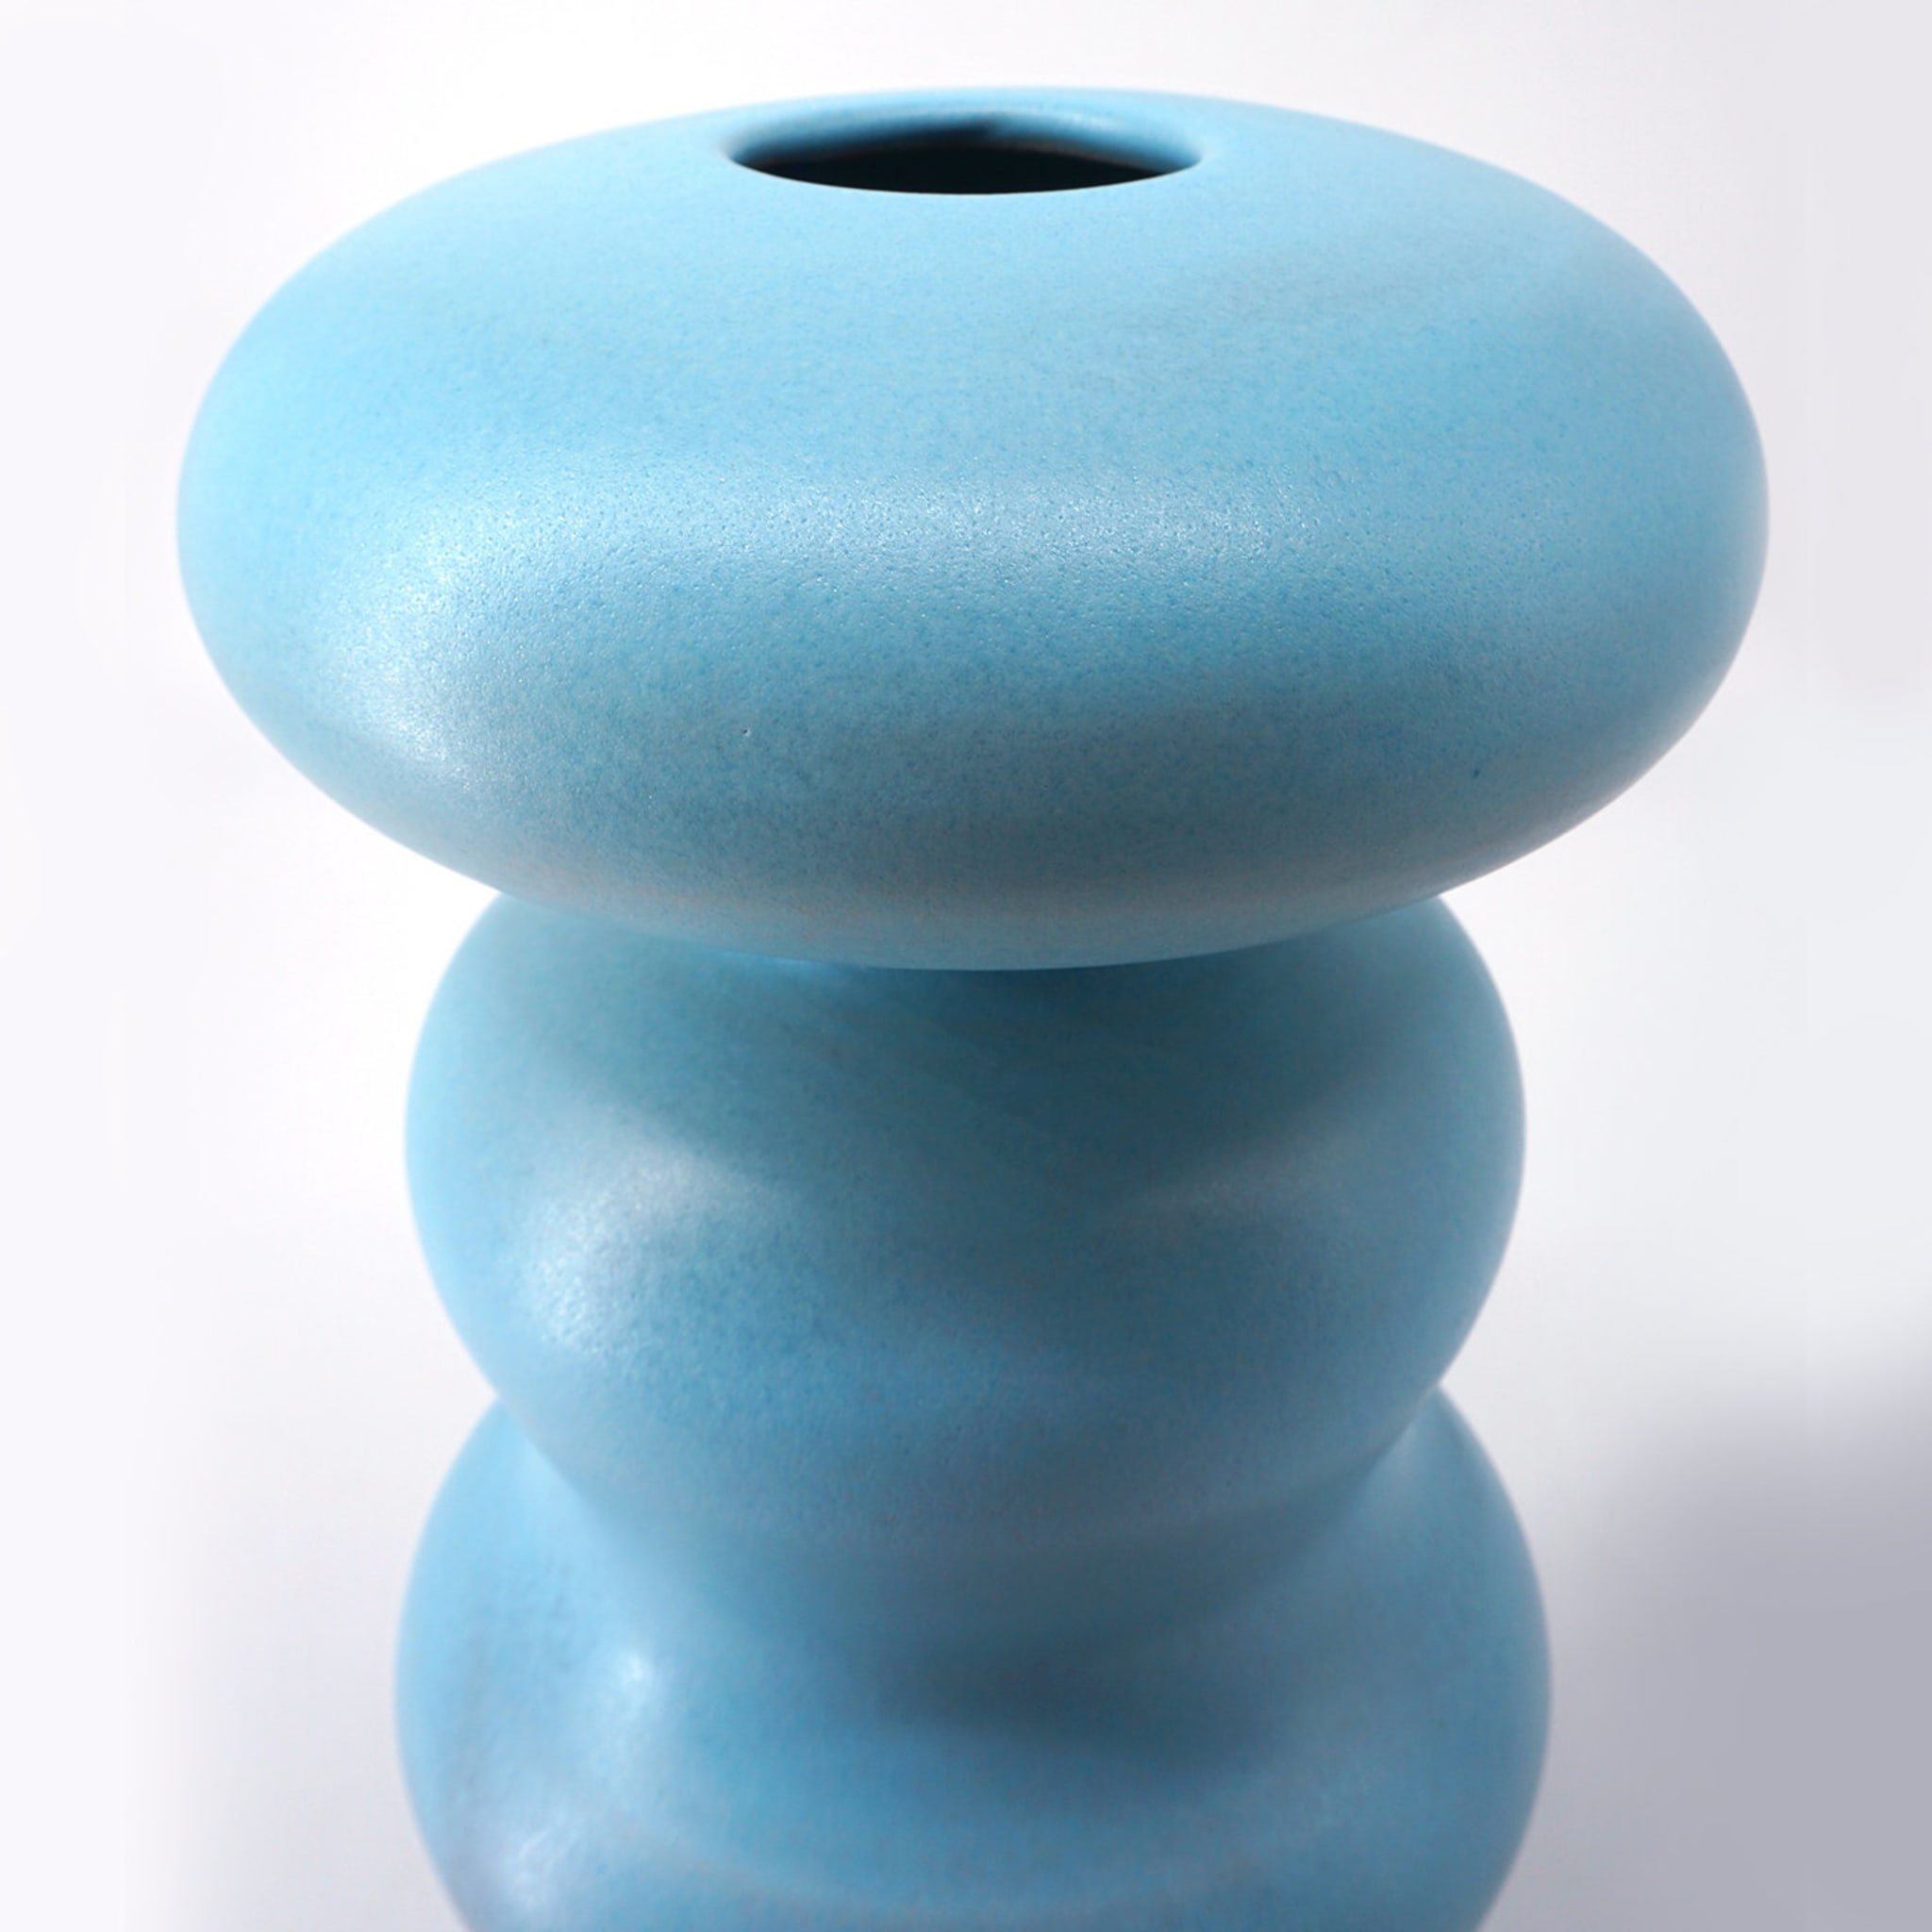 Crisalide Light Blue Vase #3 - Alternative view 1